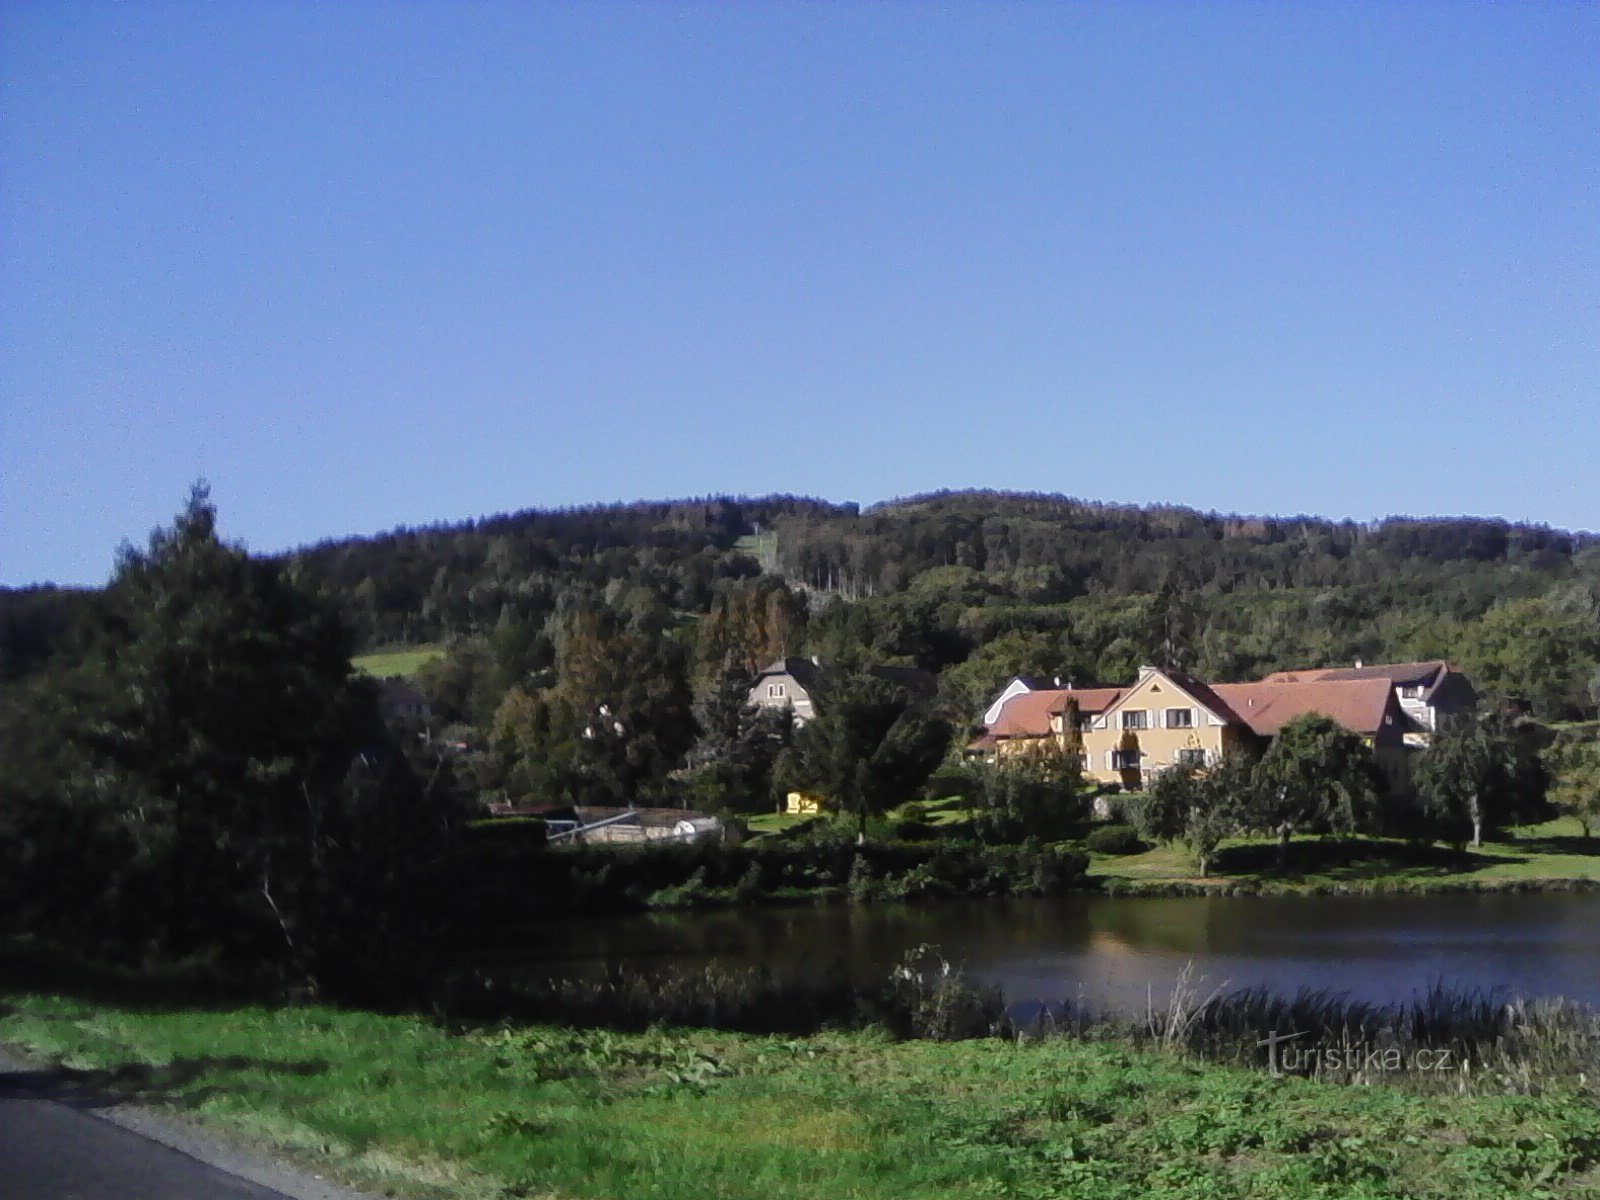 2. Kilátás a Jetřichovice-i Lihovarský rybník felett Monínec felé.